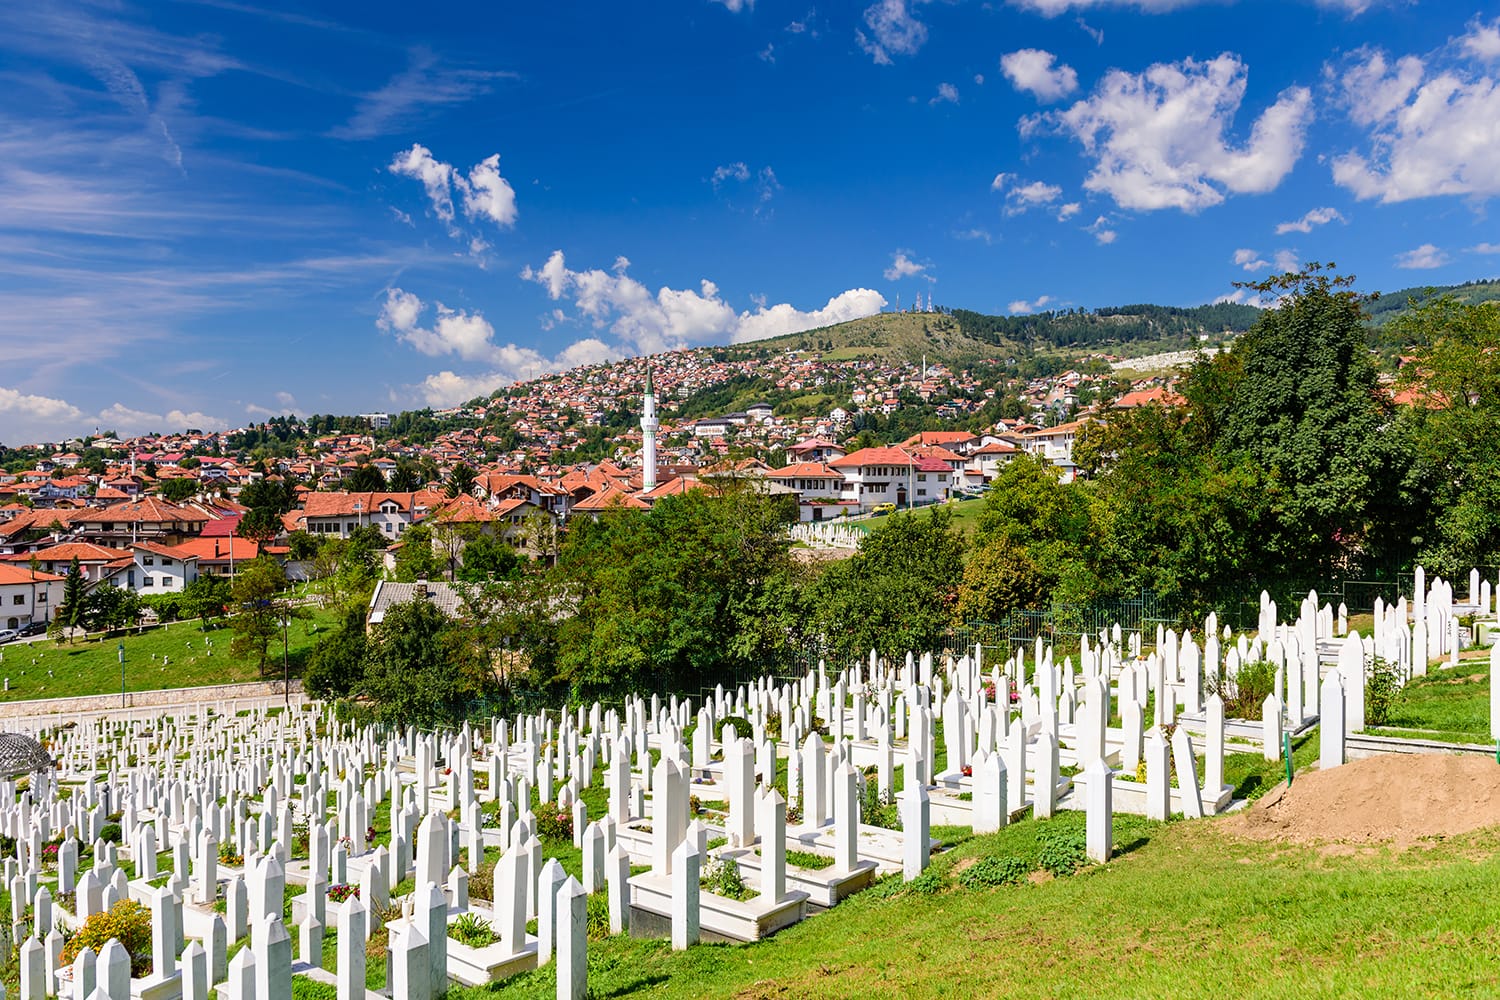 Cemetery in Sarajevo, capital city of Bosnia and Herzegovina